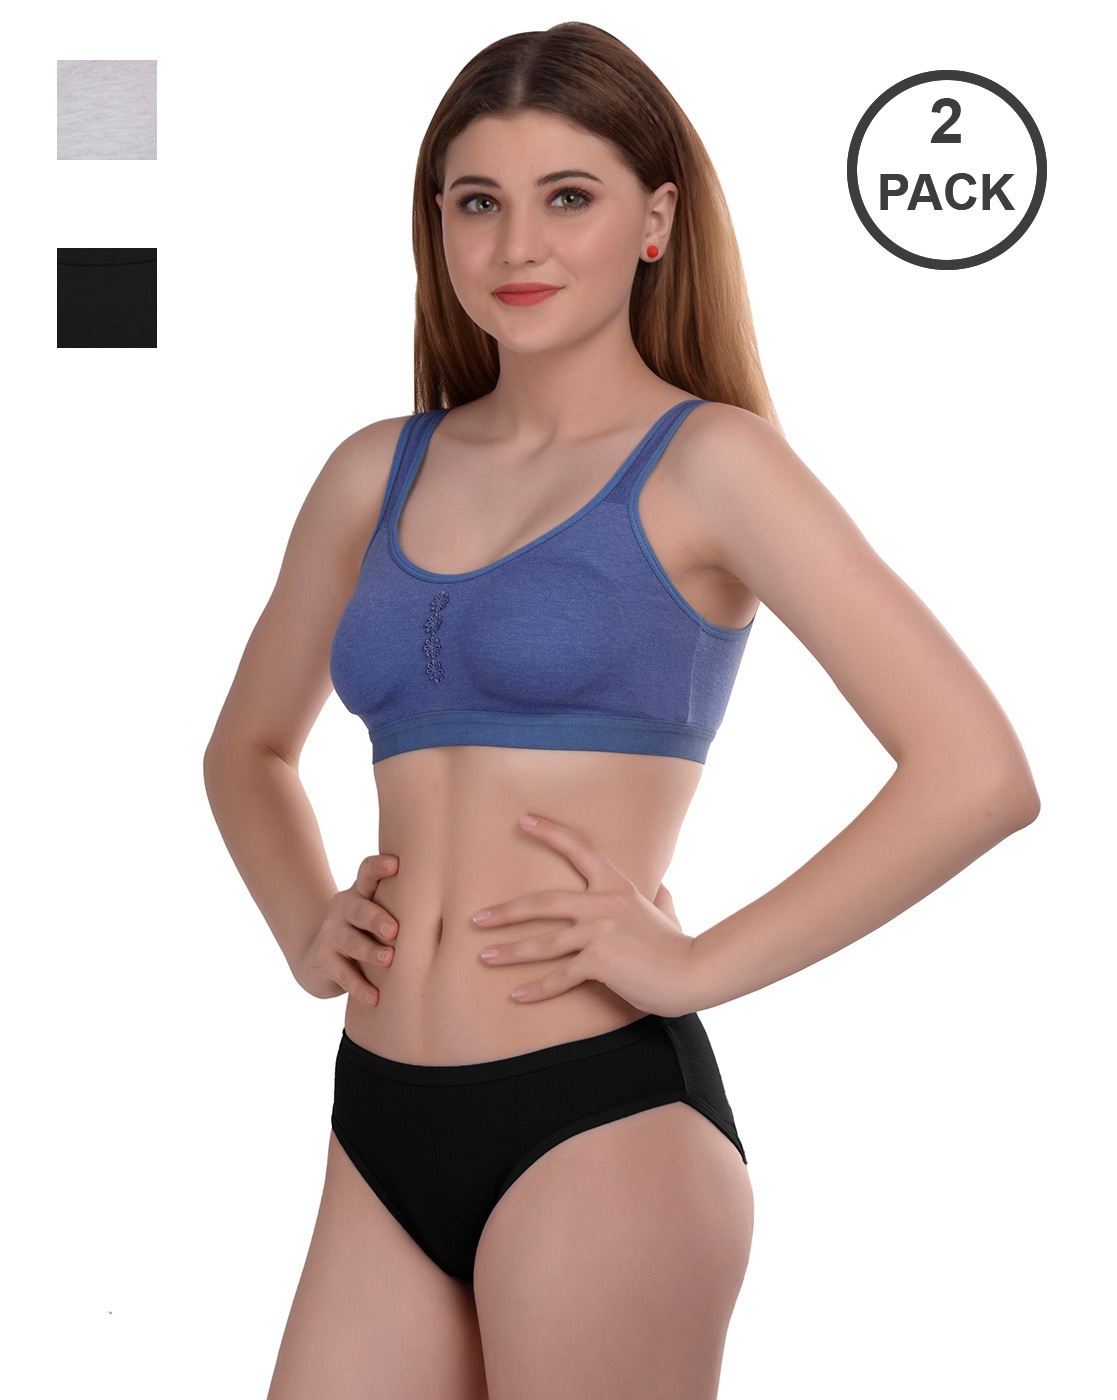 Buy Sports Bra Panty Set for Women, Gym Bra and Panty Set